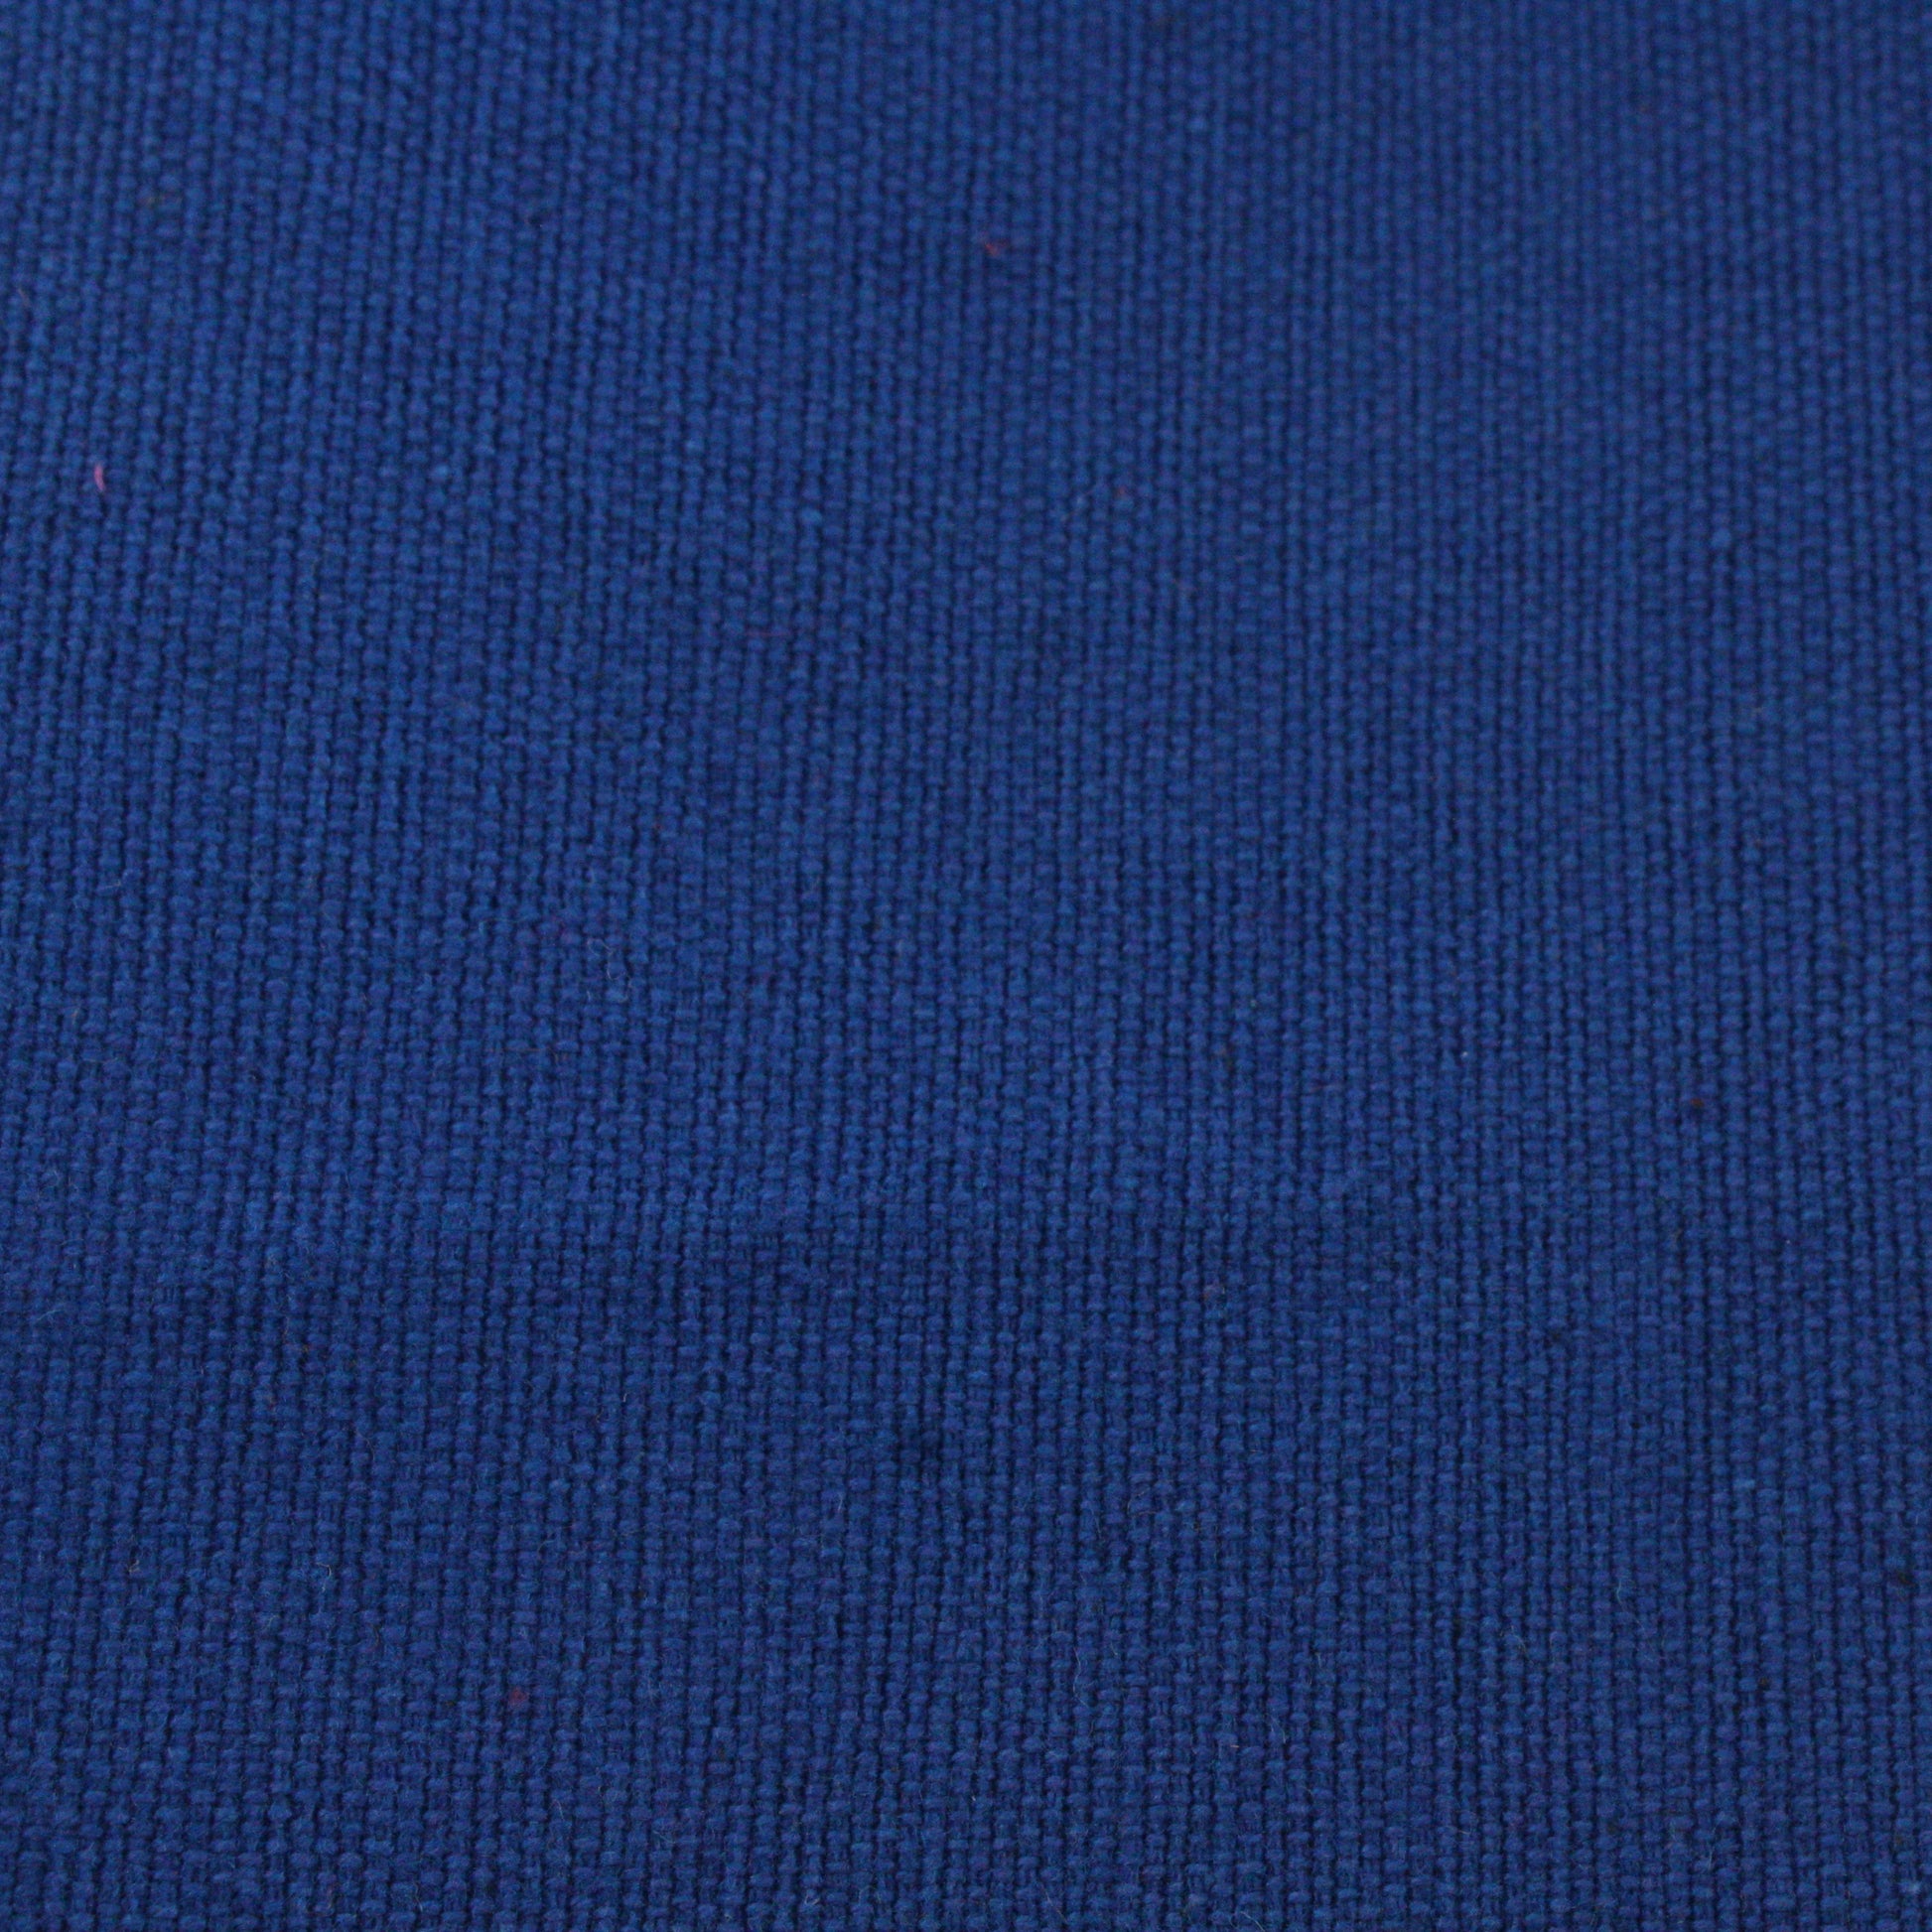 Fabric - Royal blue